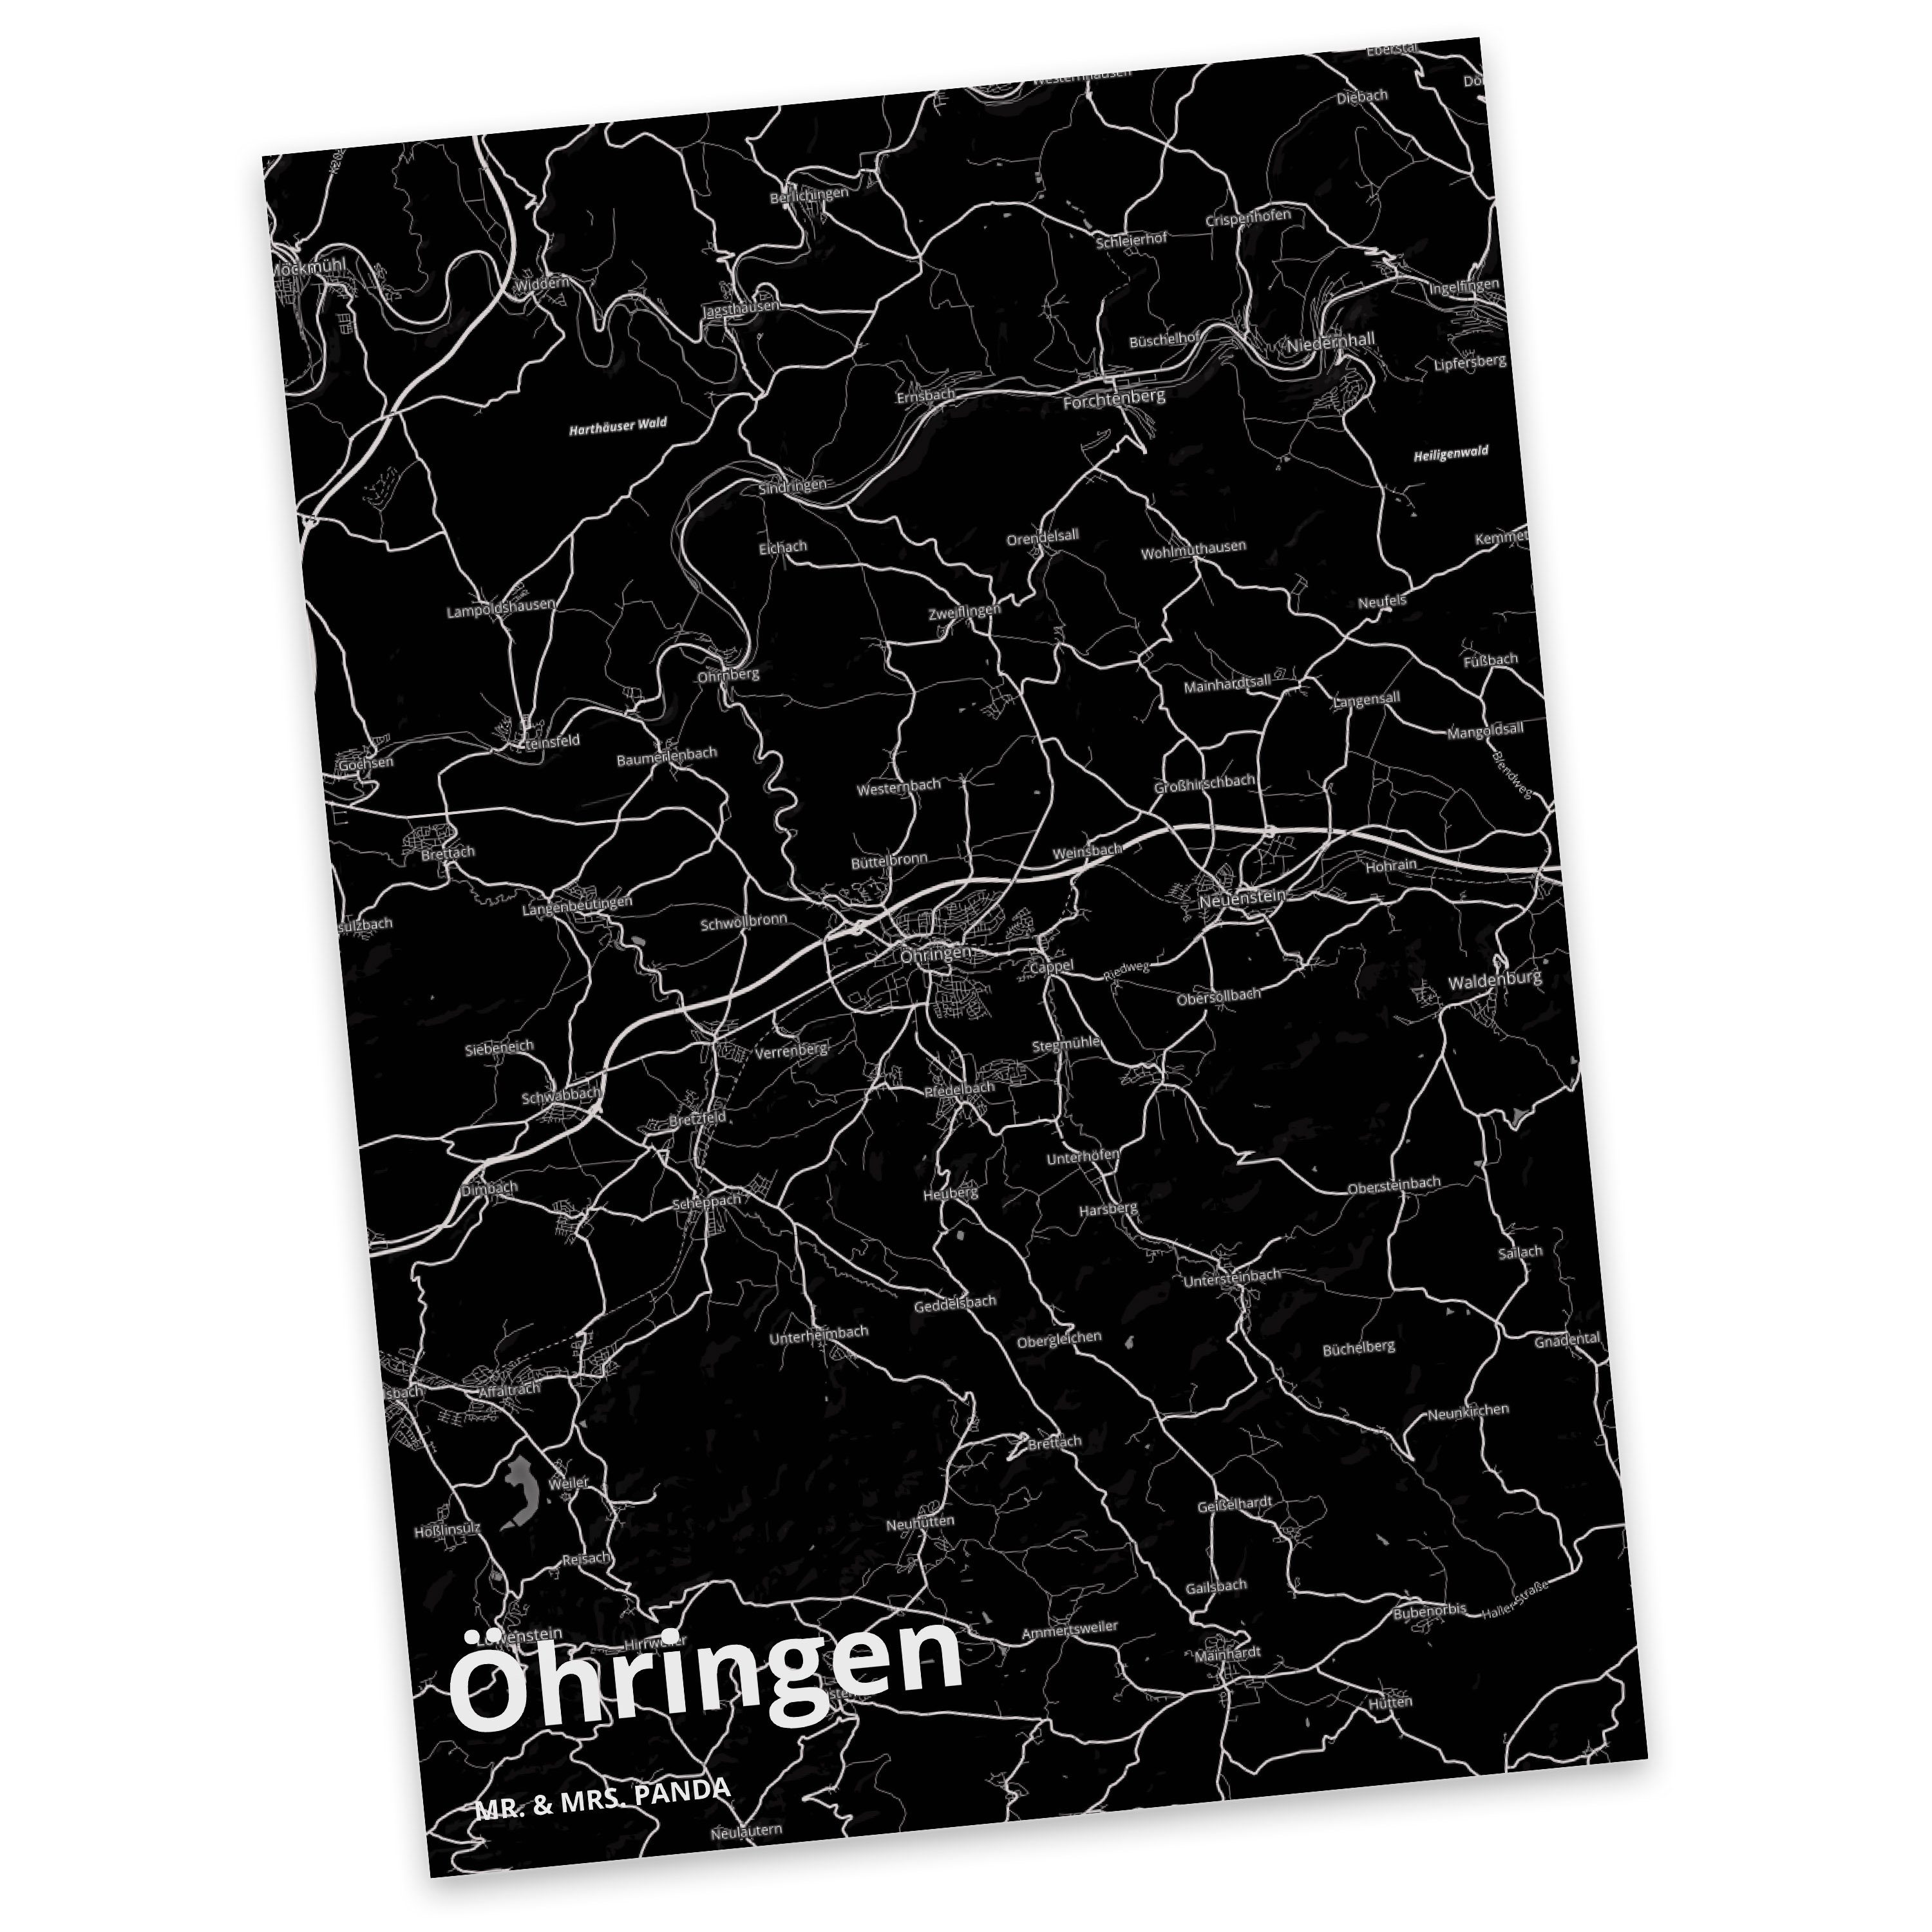 Mr. & Mrs. Panda Postkarte Öhringen - Geschenk, Einladung, Stadt, Stadt Dorf Karte Landkarte Map